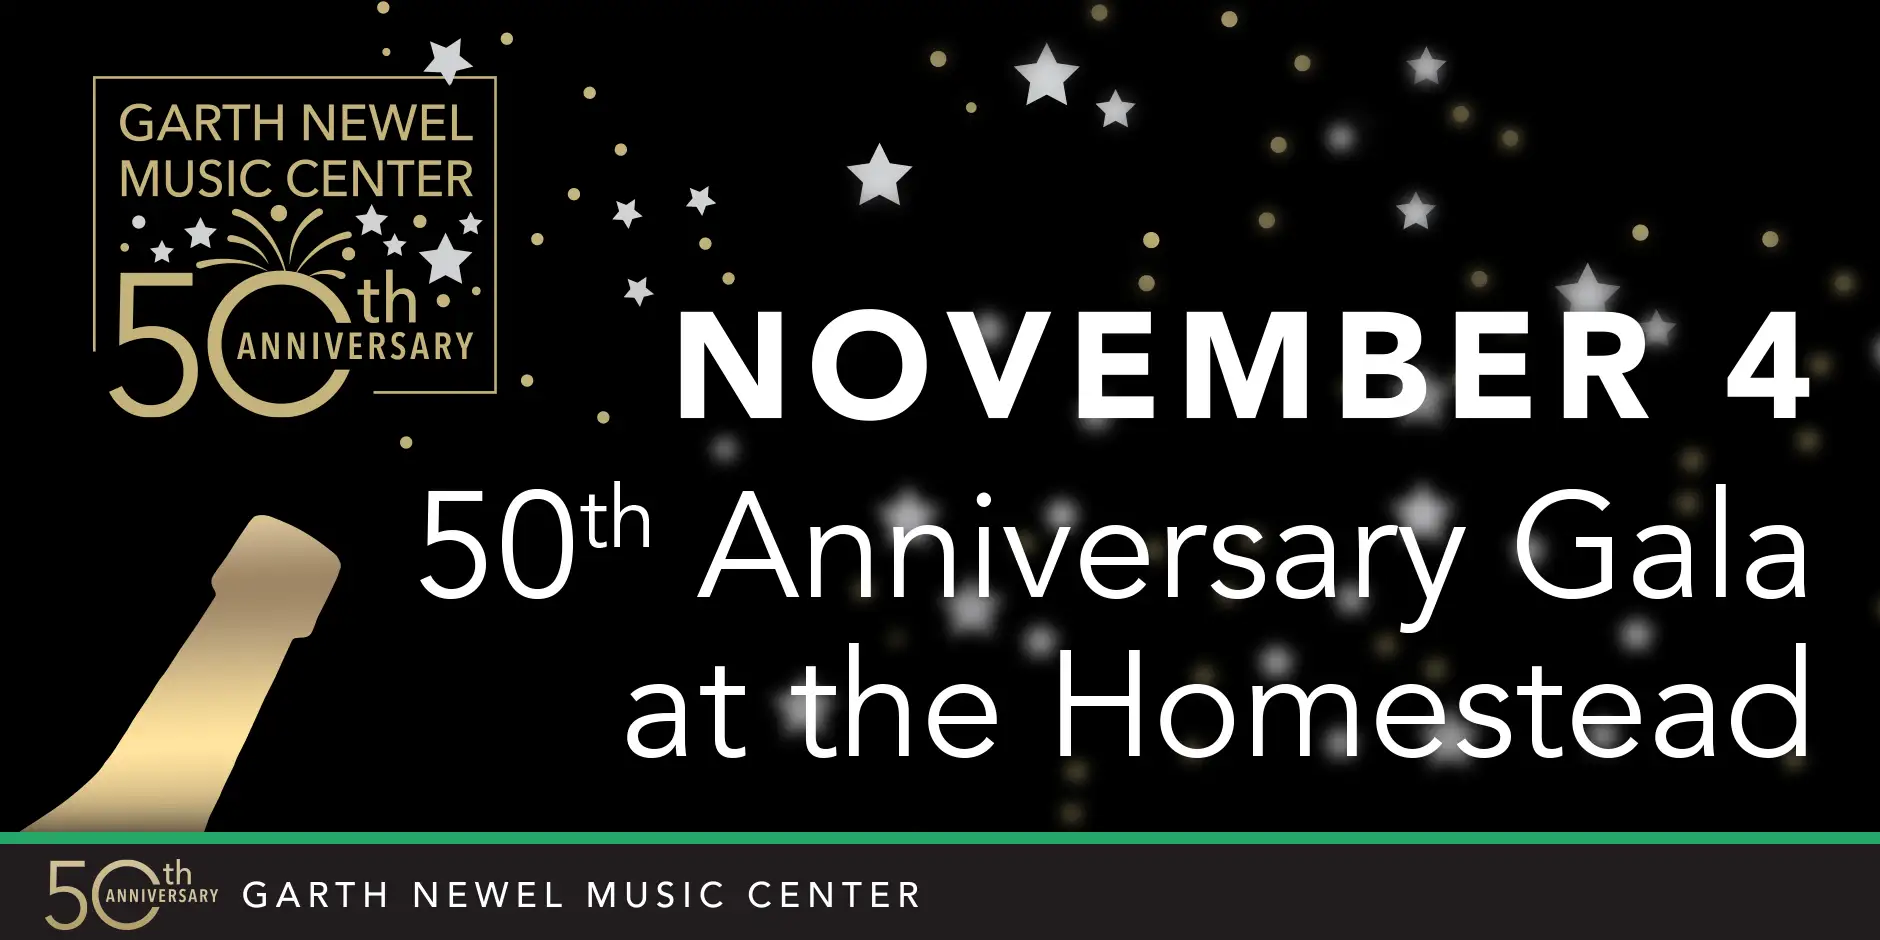 Nov 4 - 50th Anniversary Gala at the Homestead